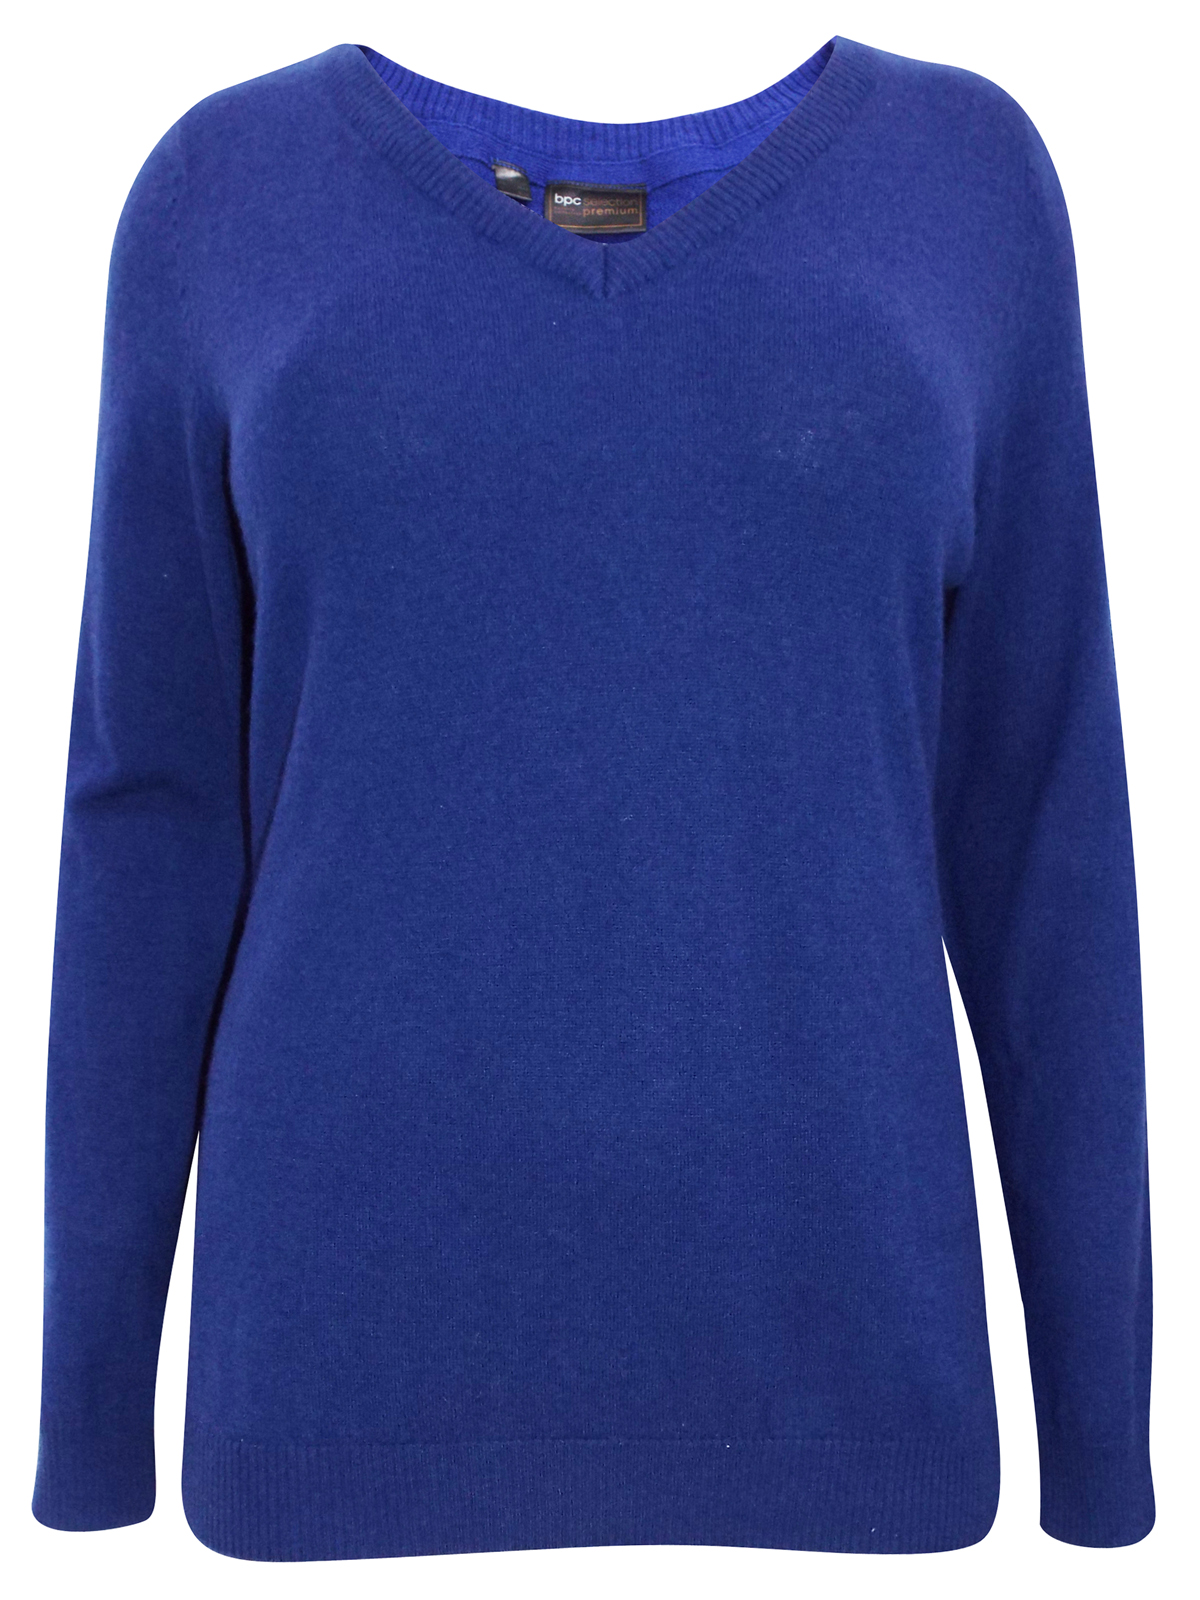 BPC Selection - - BPC Selection BLUE Wool Blend V-Neck Knitted Jumper ...